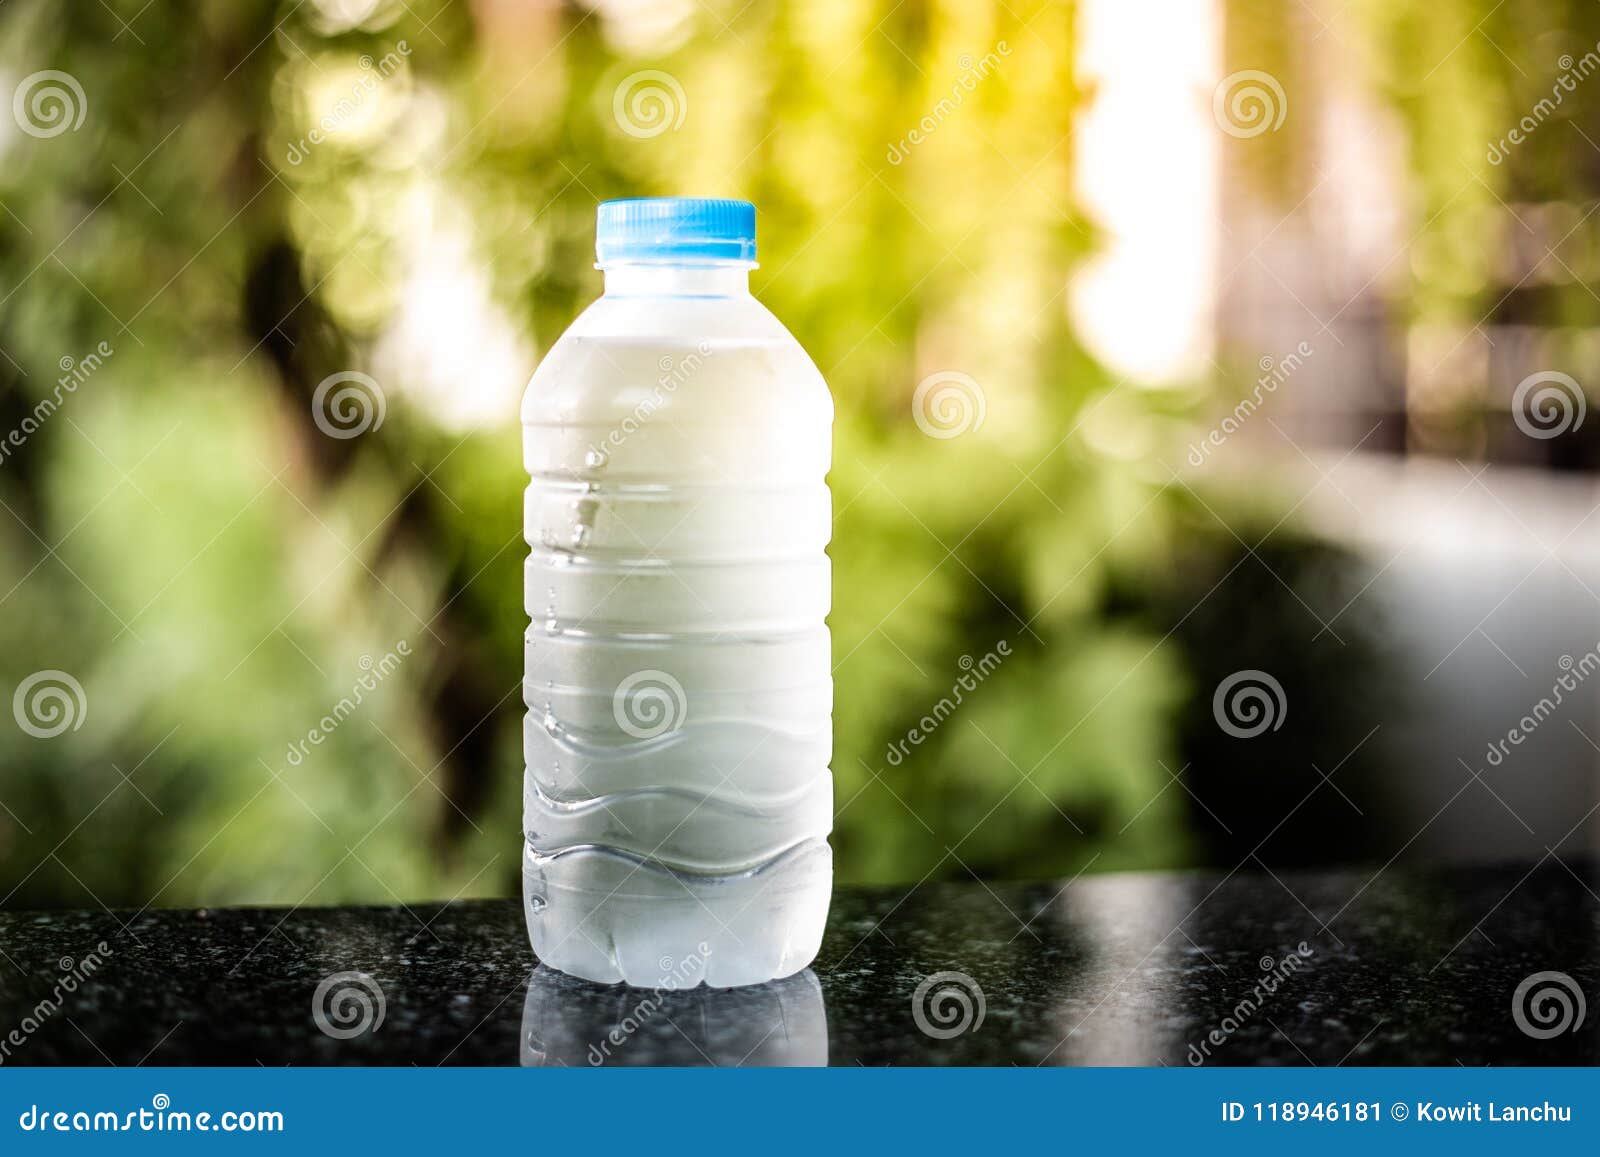 https://thumbs.dreamstime.com/z/plastic-bottle-drink-water-reflection-table-sunlight-cold-concept-bokeh-118946181.jpg